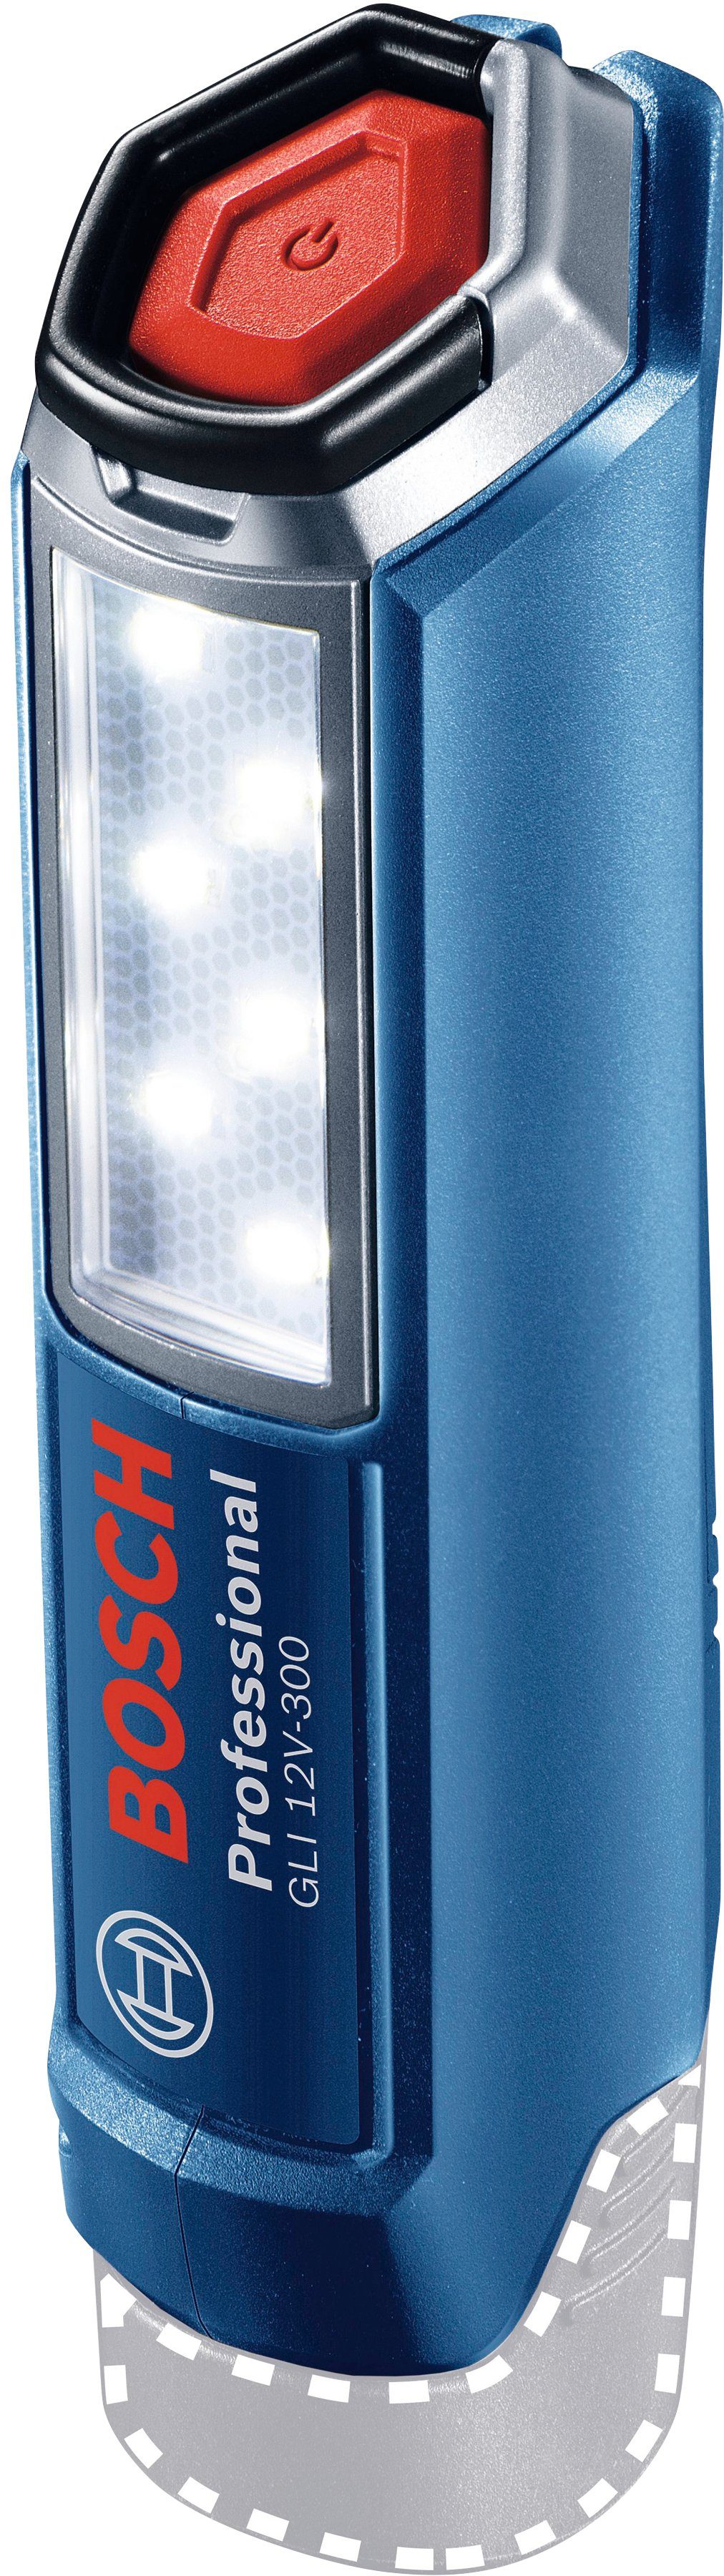 lm, V, LED 12 Arbeitsleuchte Professional GLI LED Akku integriert, ohne 12V-300, Bosch 300 fest